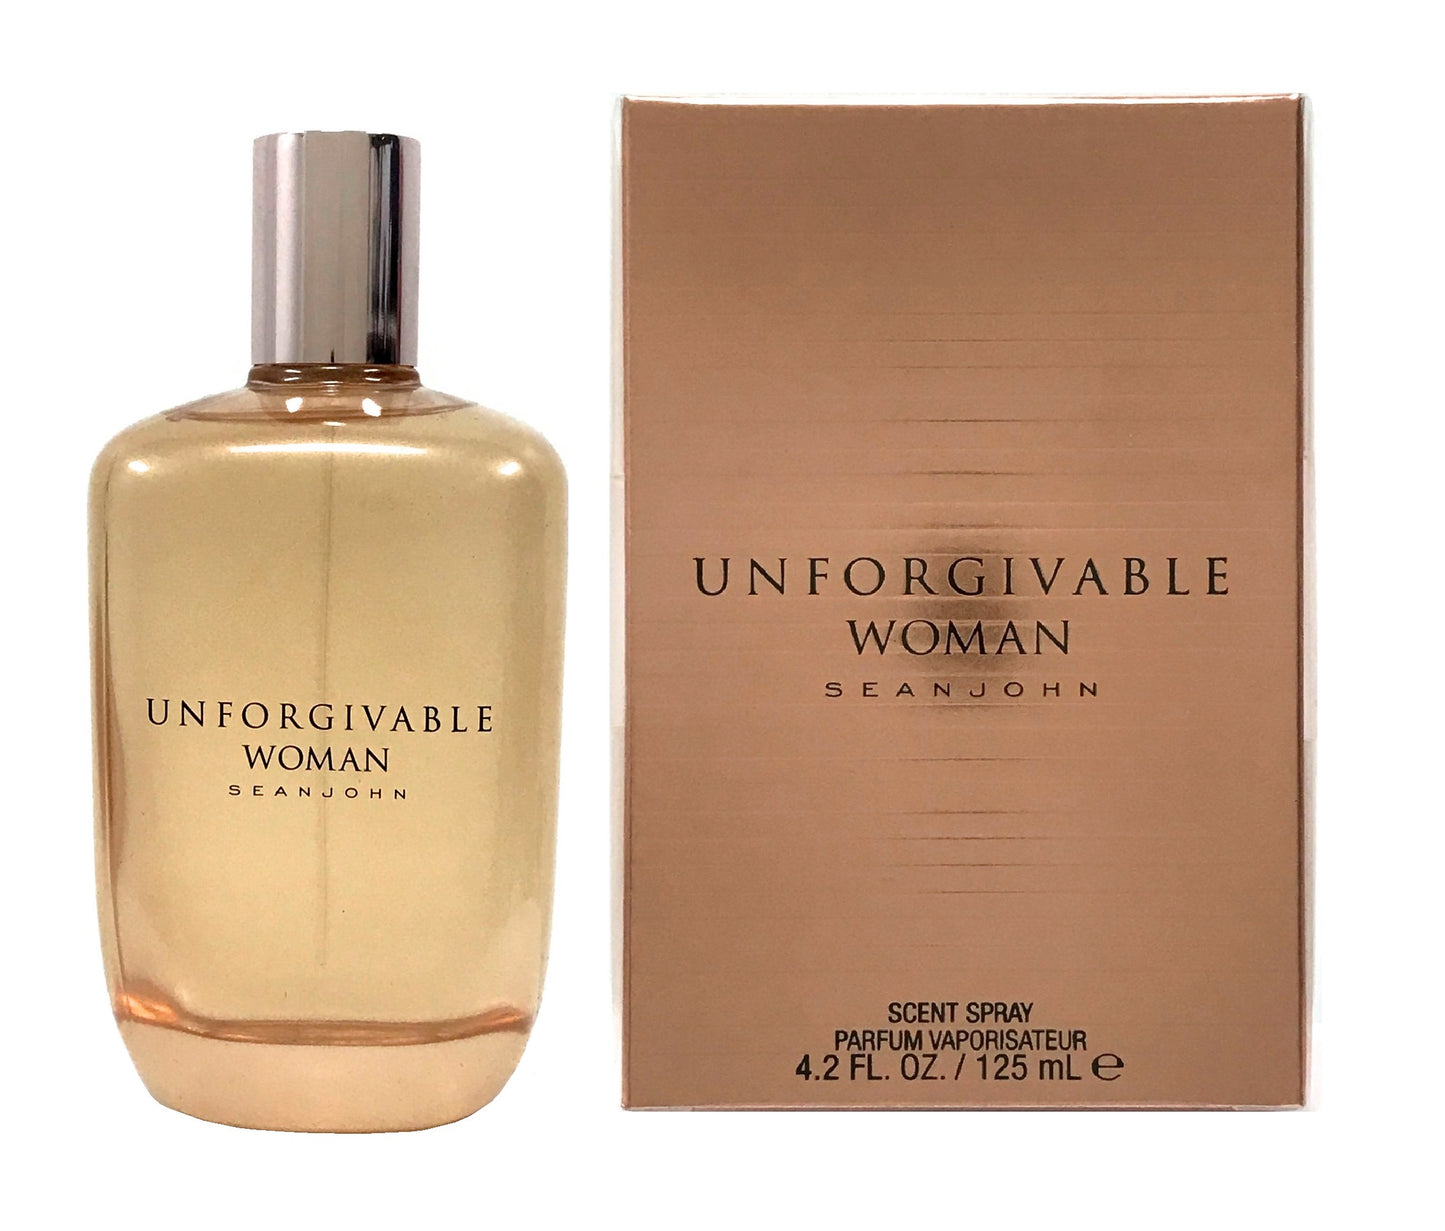 Sean John Unforgivable Women Perfume Spray 4.2 oz - New in Box